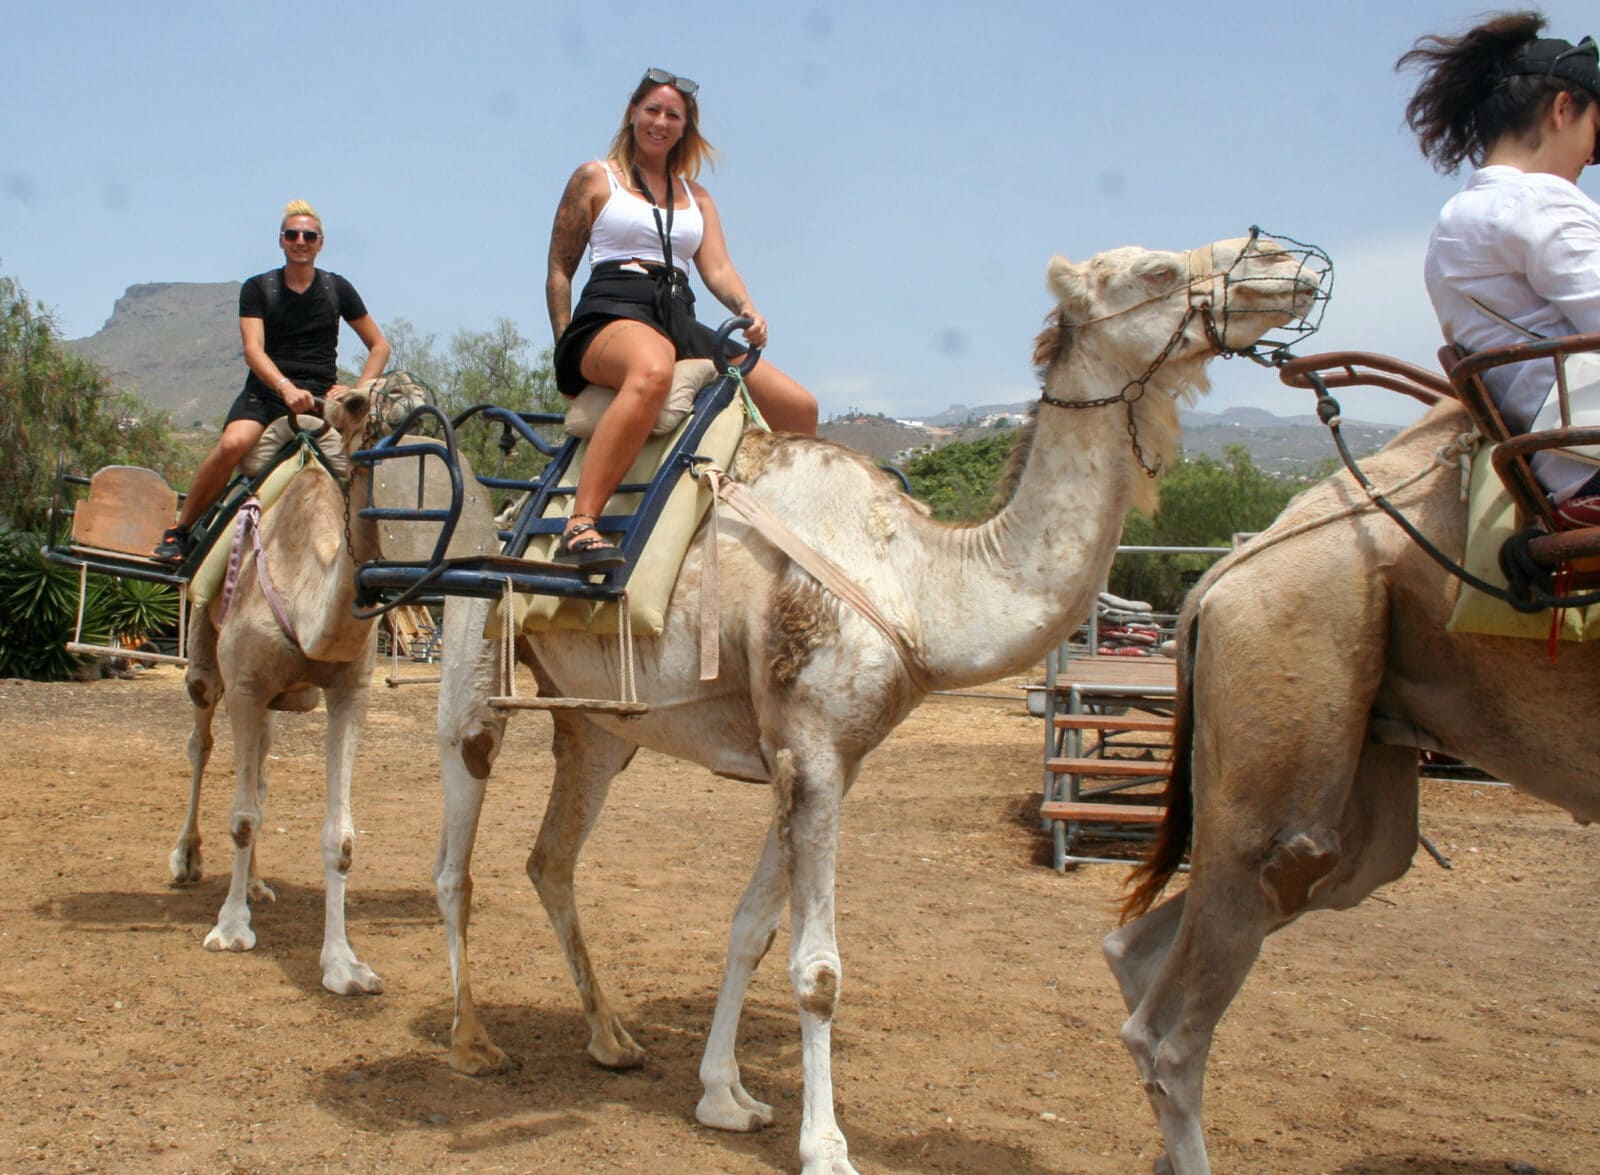 Riding a friendly camel